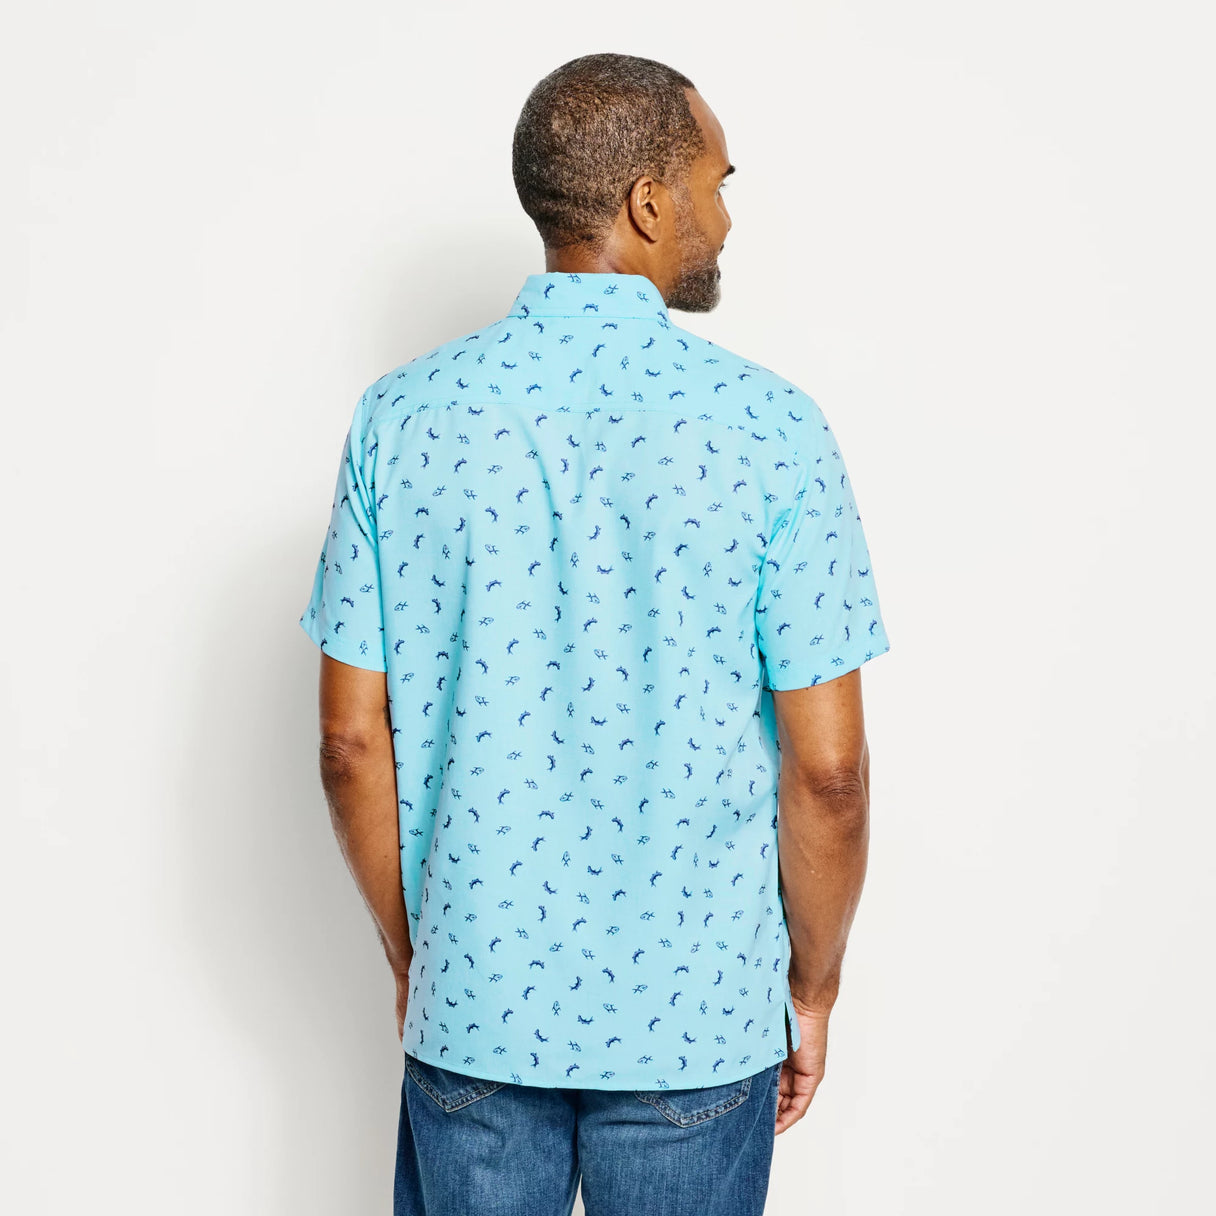 Orvis Tech Chambray Printed Short-Sleeve Shirt - Cloud Blue